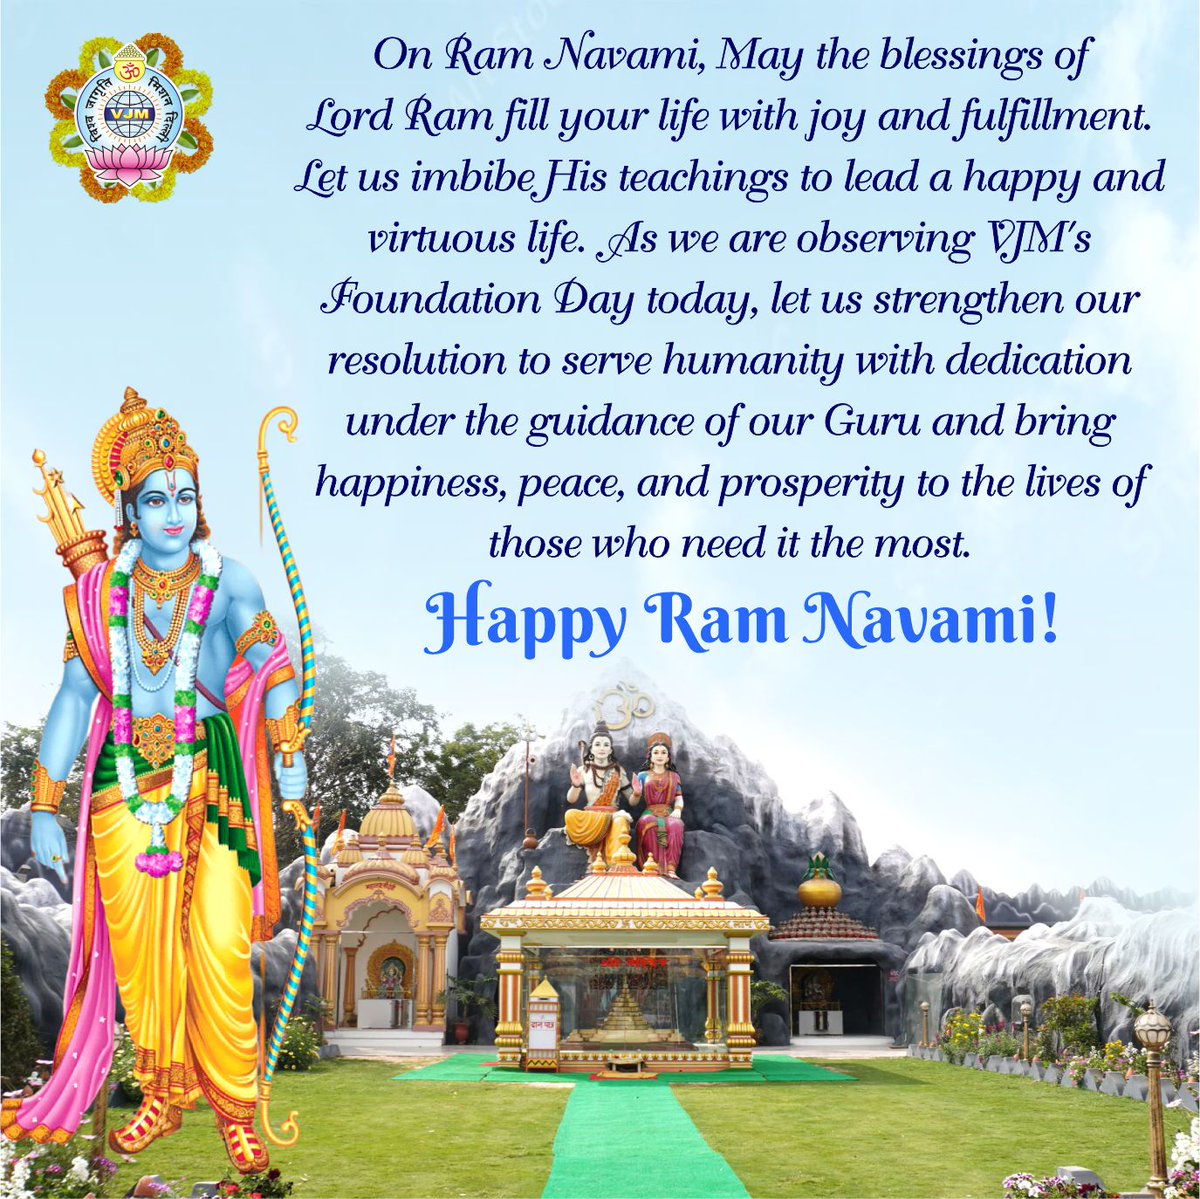 On Ram Navami, May the blessings of Lord Ram fill your life with joy and fulfillment.

Happy Ram Navami!

#VJM #ramnavmi #ramnavmi2024 #lordrama #navratri #ayodhya #lordrama #celebration #FoundationDay #foundationday2024 #SudhanshujiMaharaj #drarchikadidi #humanity #happiness